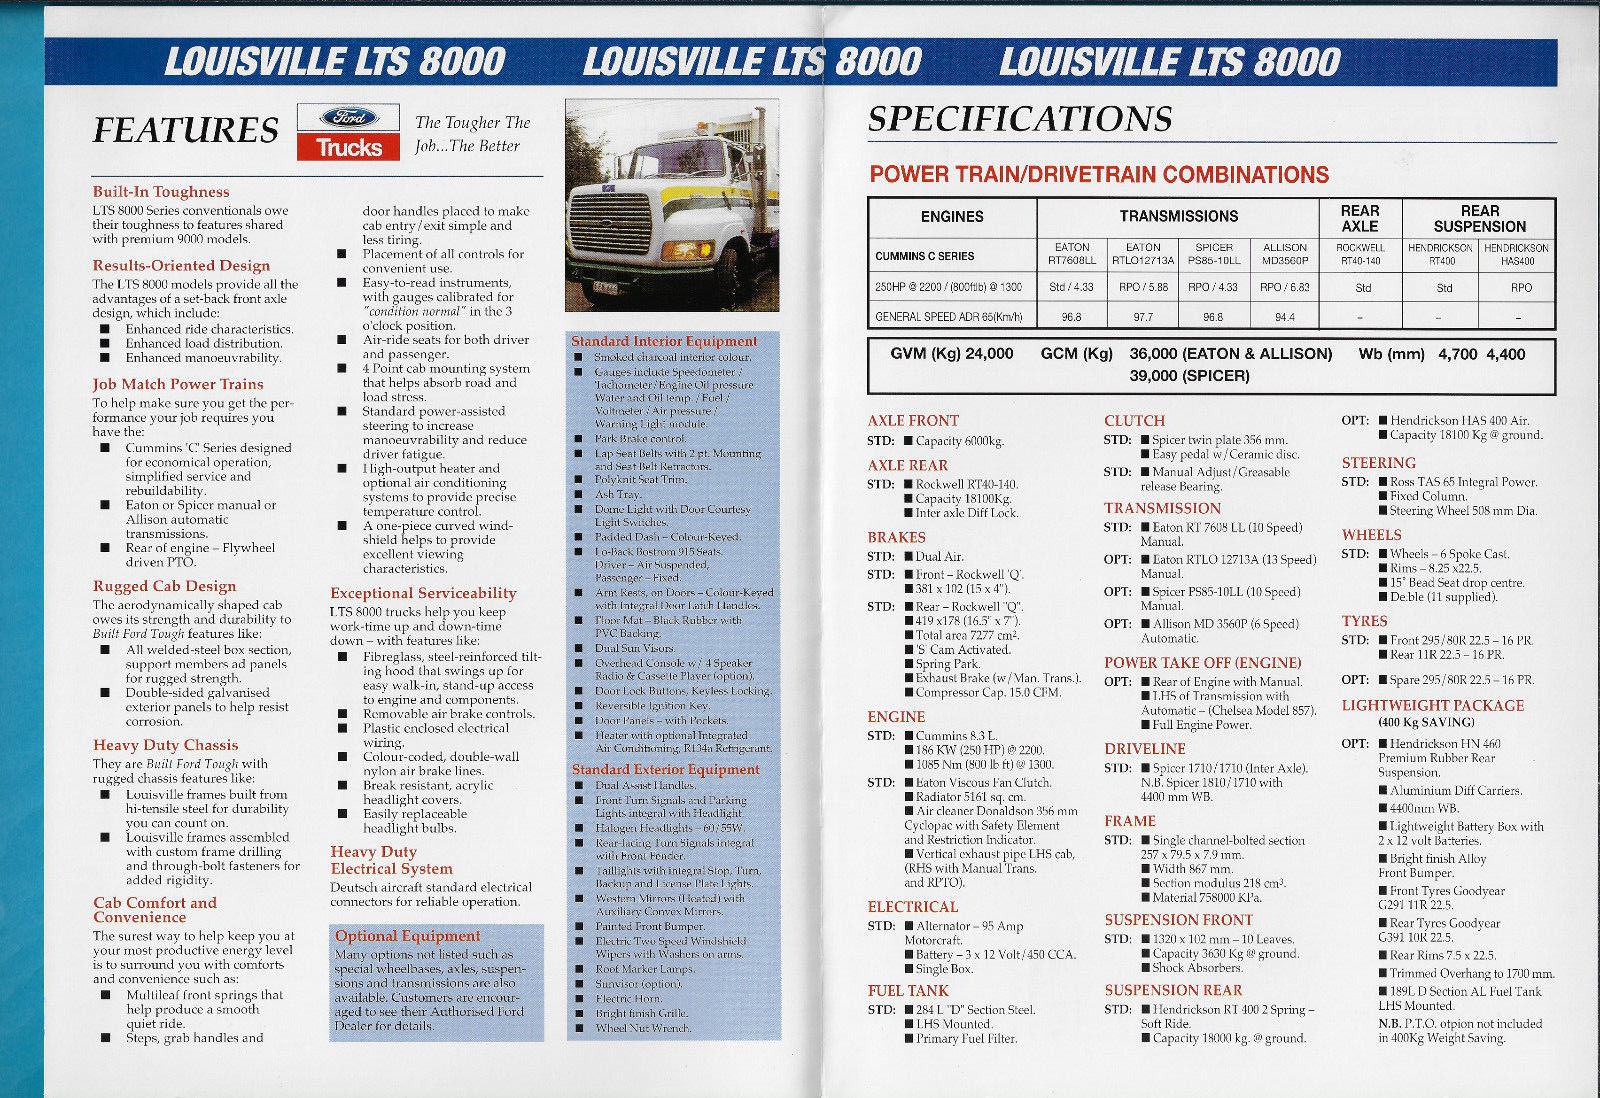 Ford Louisville LTS 8000 (2).jpg-2022-12-7 13.59.49